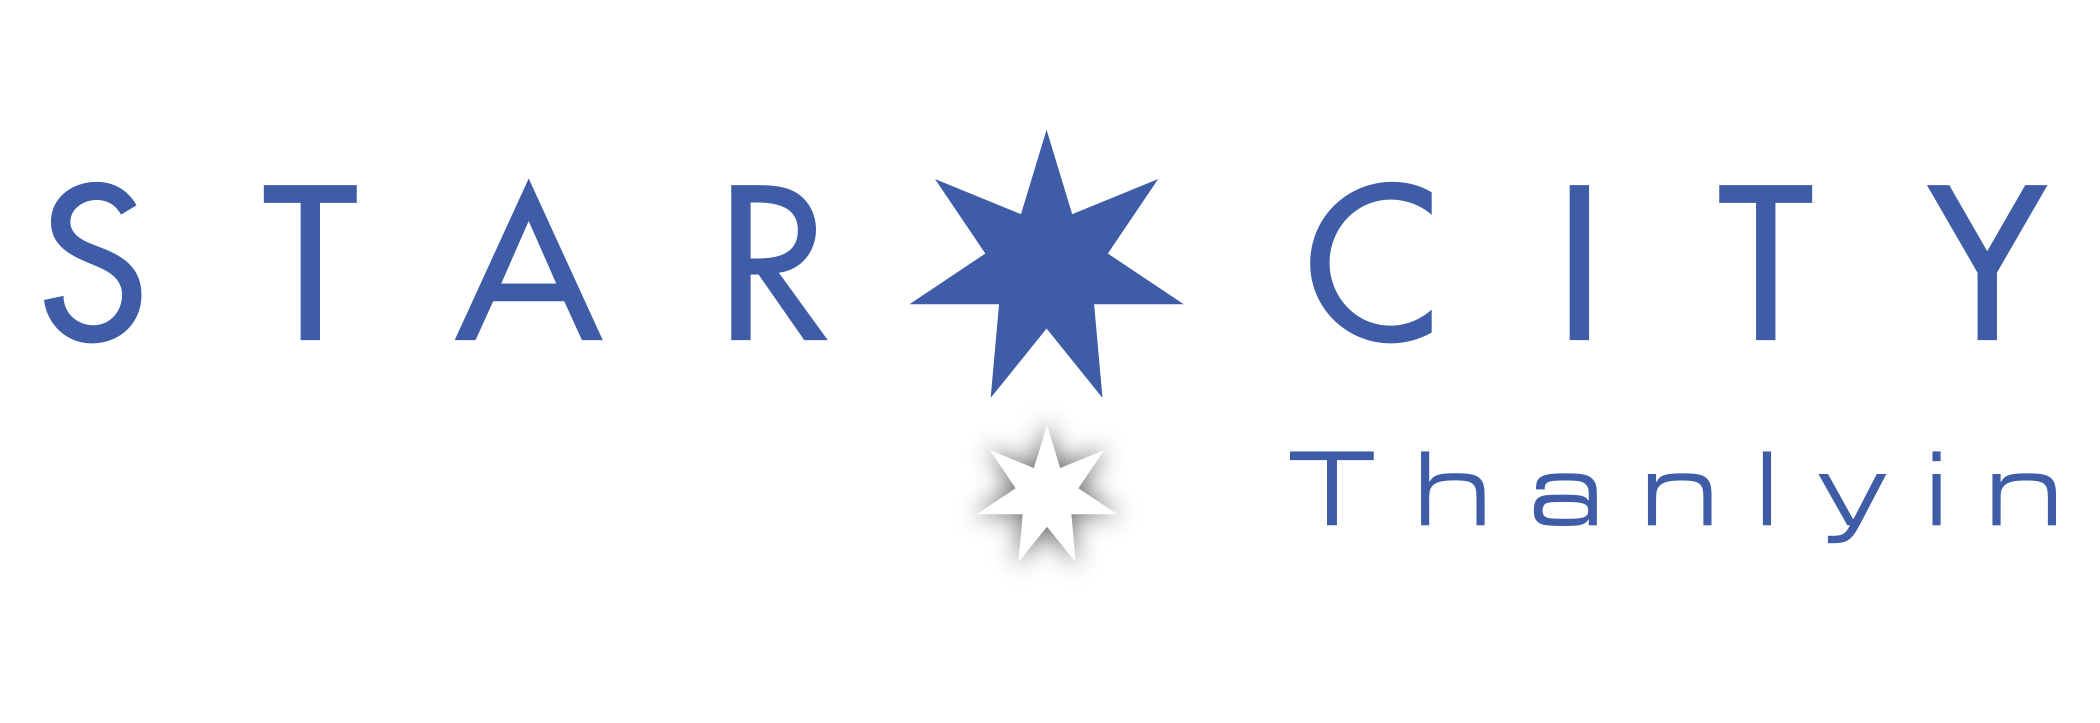 International, Spa-Yoma, Star City, Logo